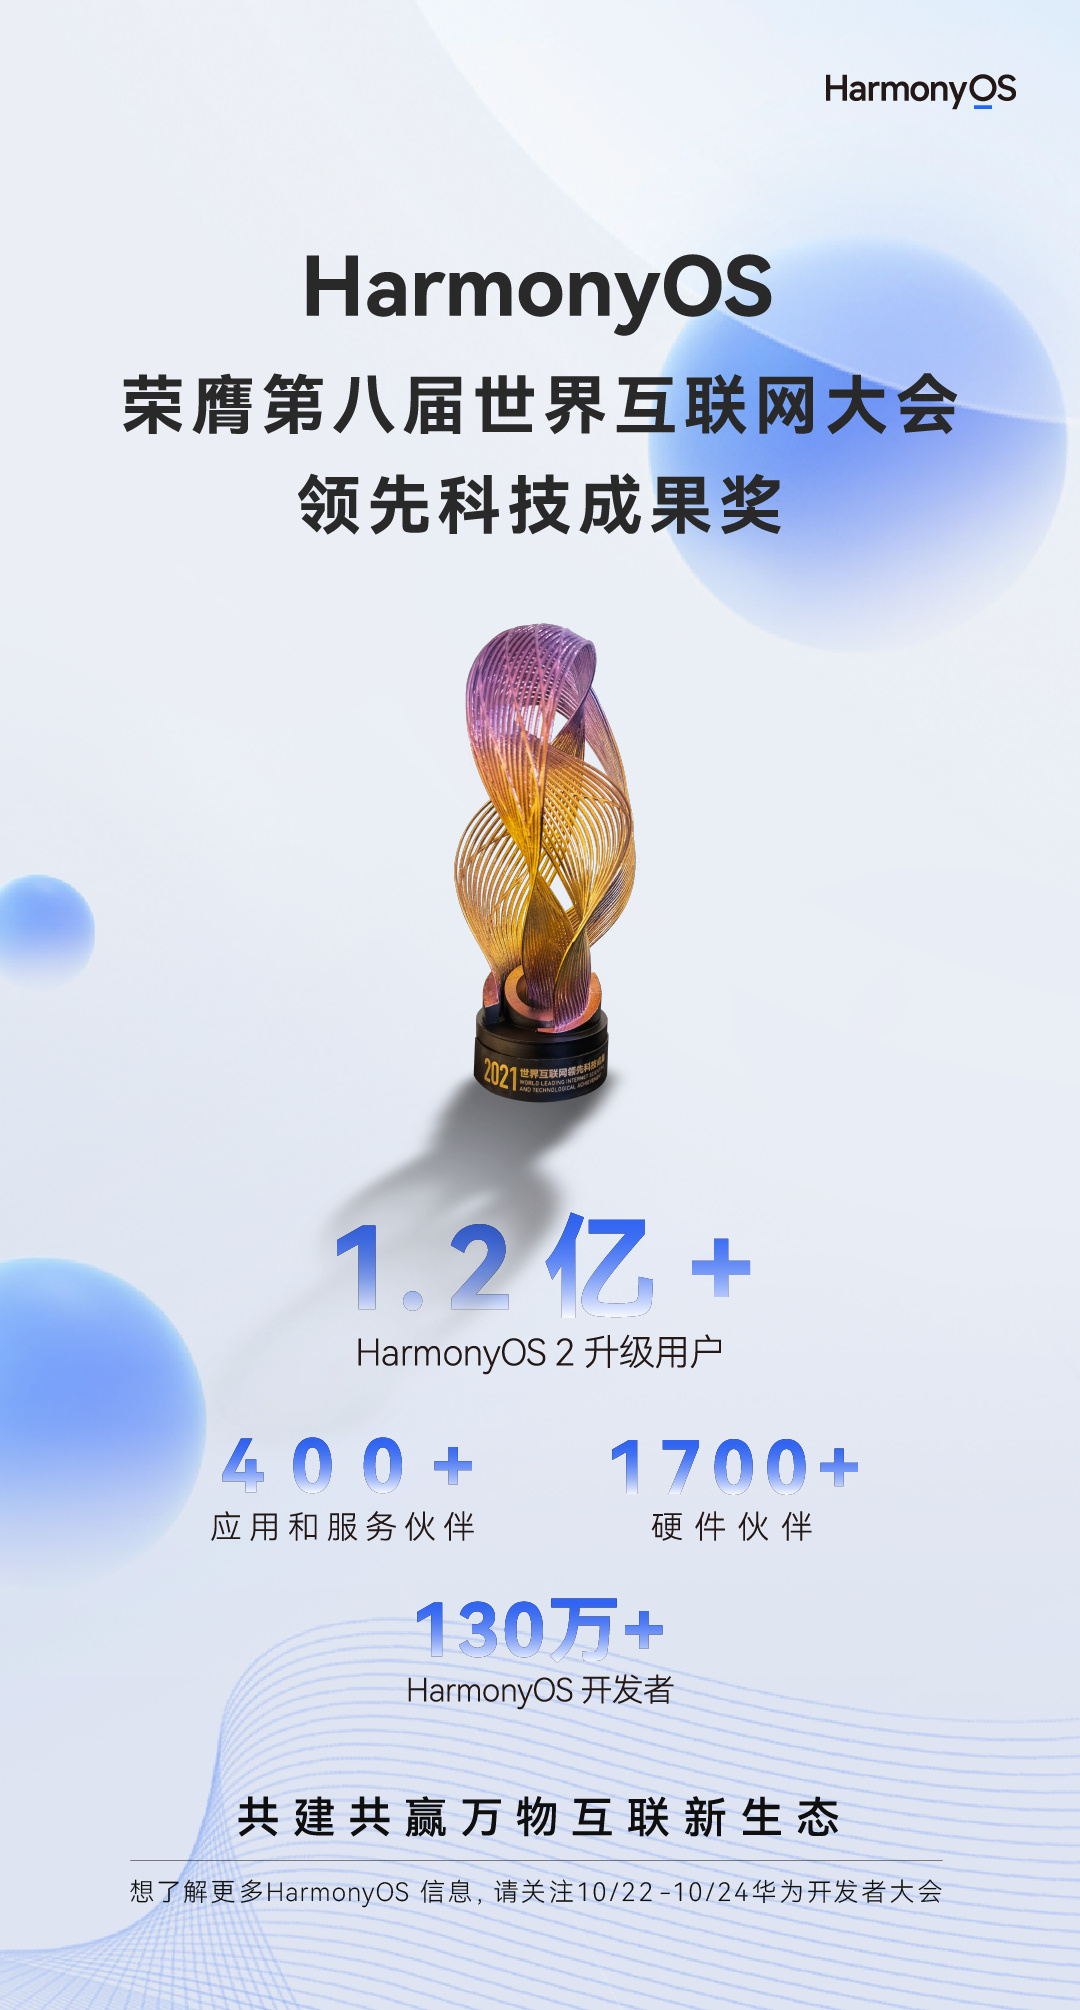 Huawei HarmonyOS won the Leading Technology Achievement Award